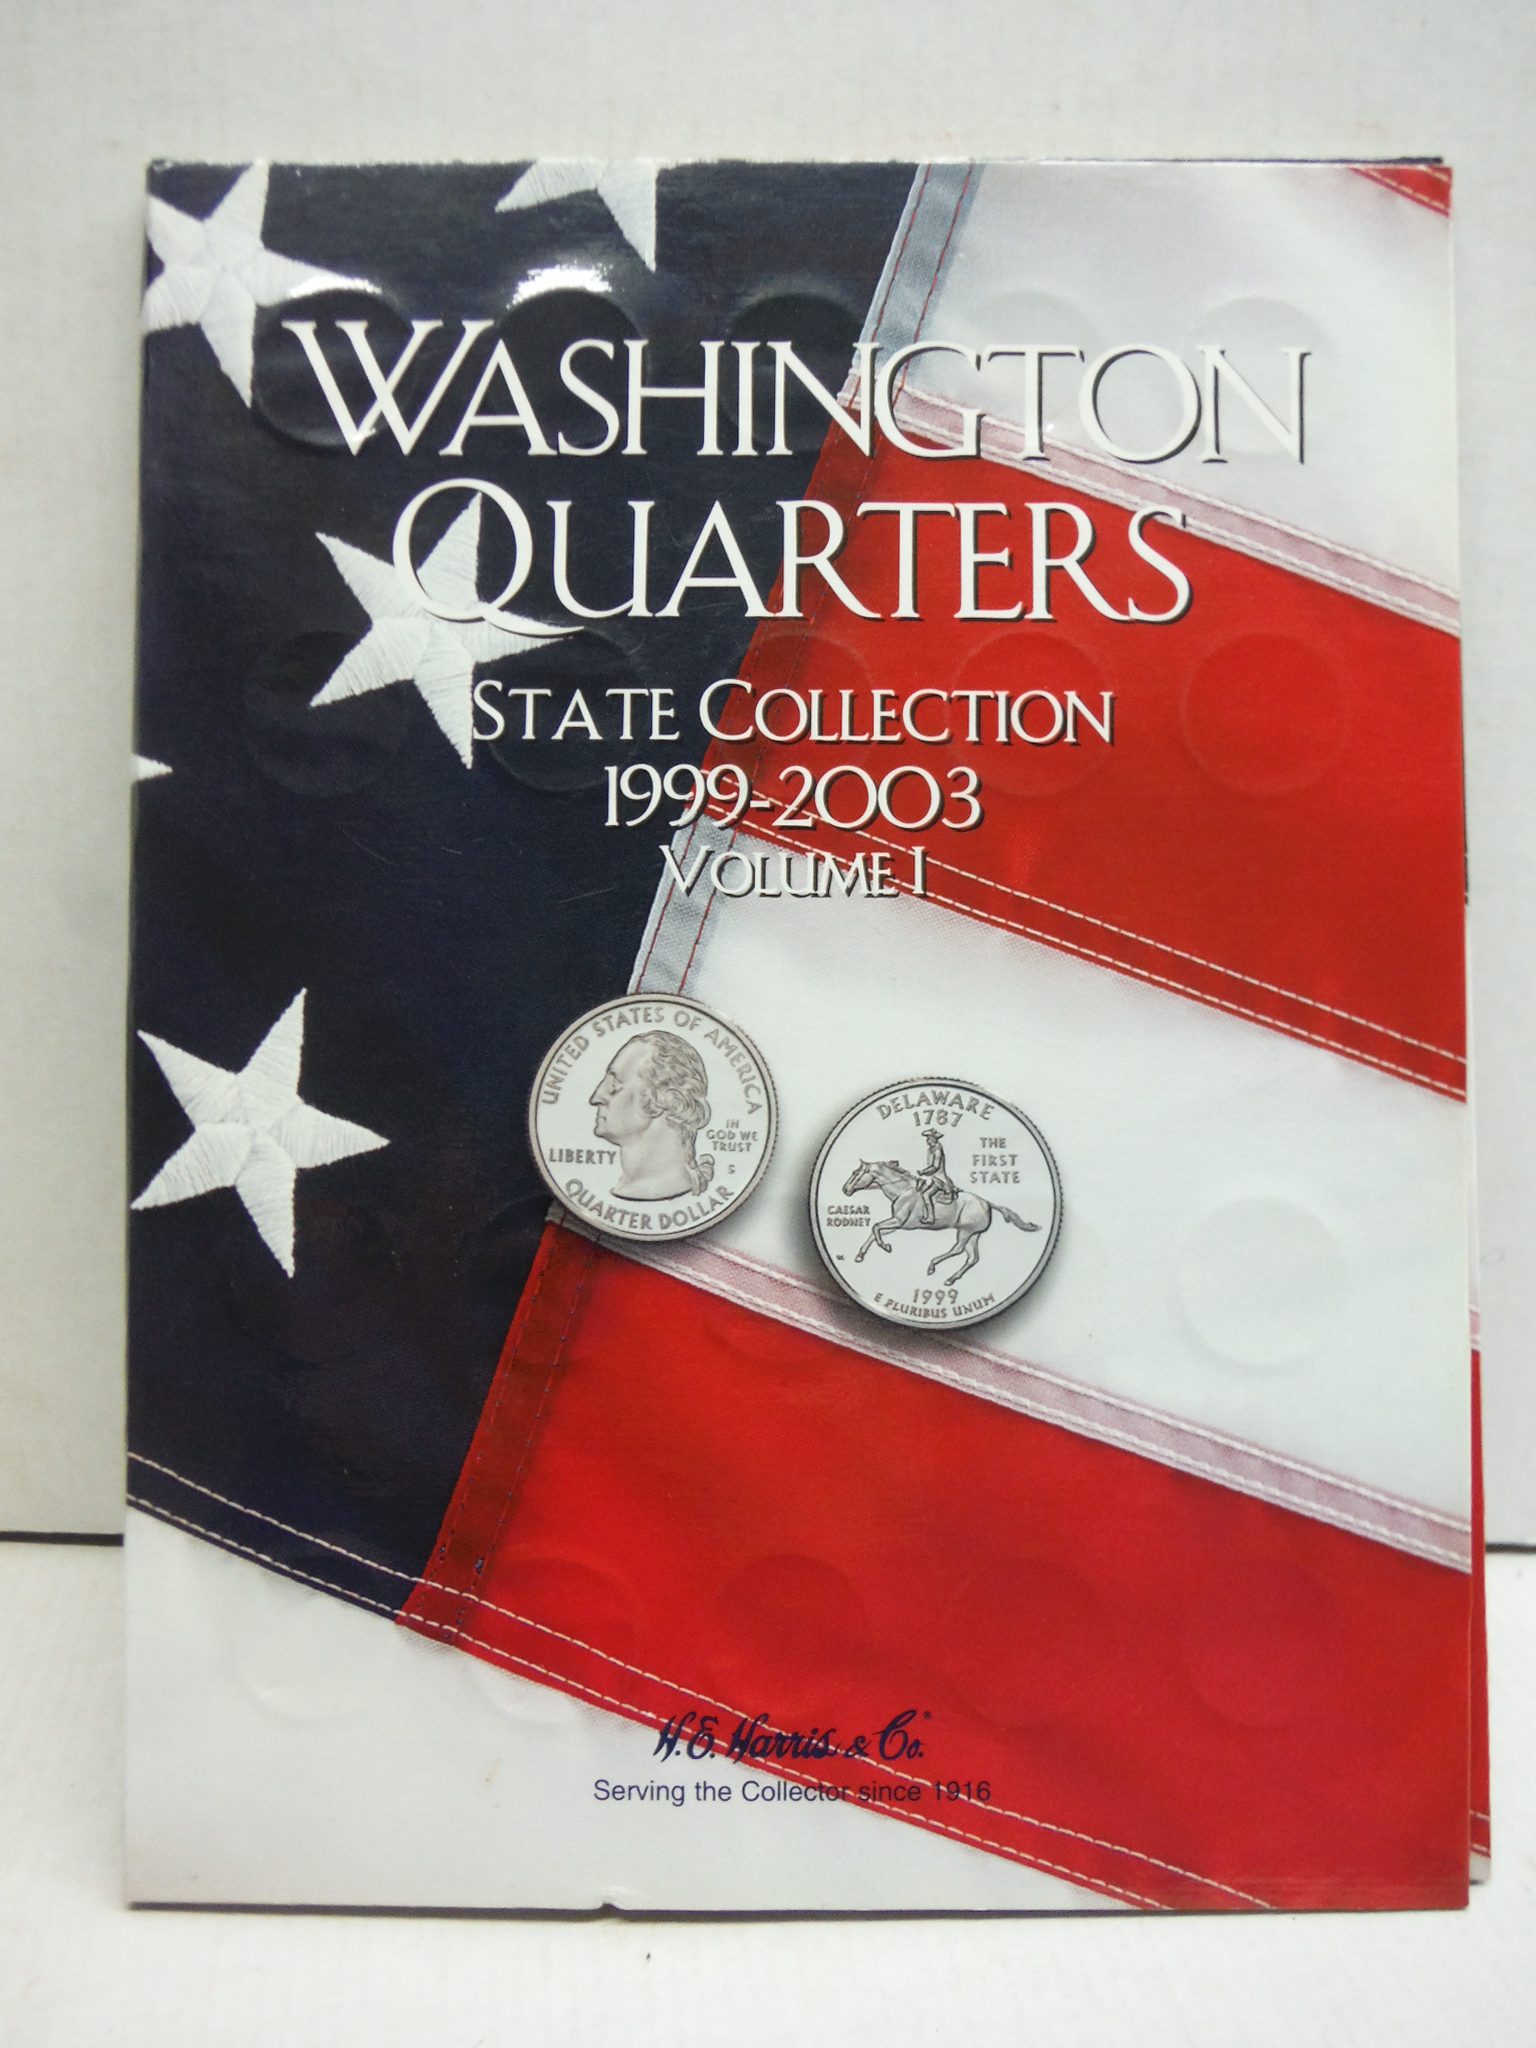 H.E. Harris & Co. Washington Quarters State Collection 1999-2003 Vol. 1 book wit